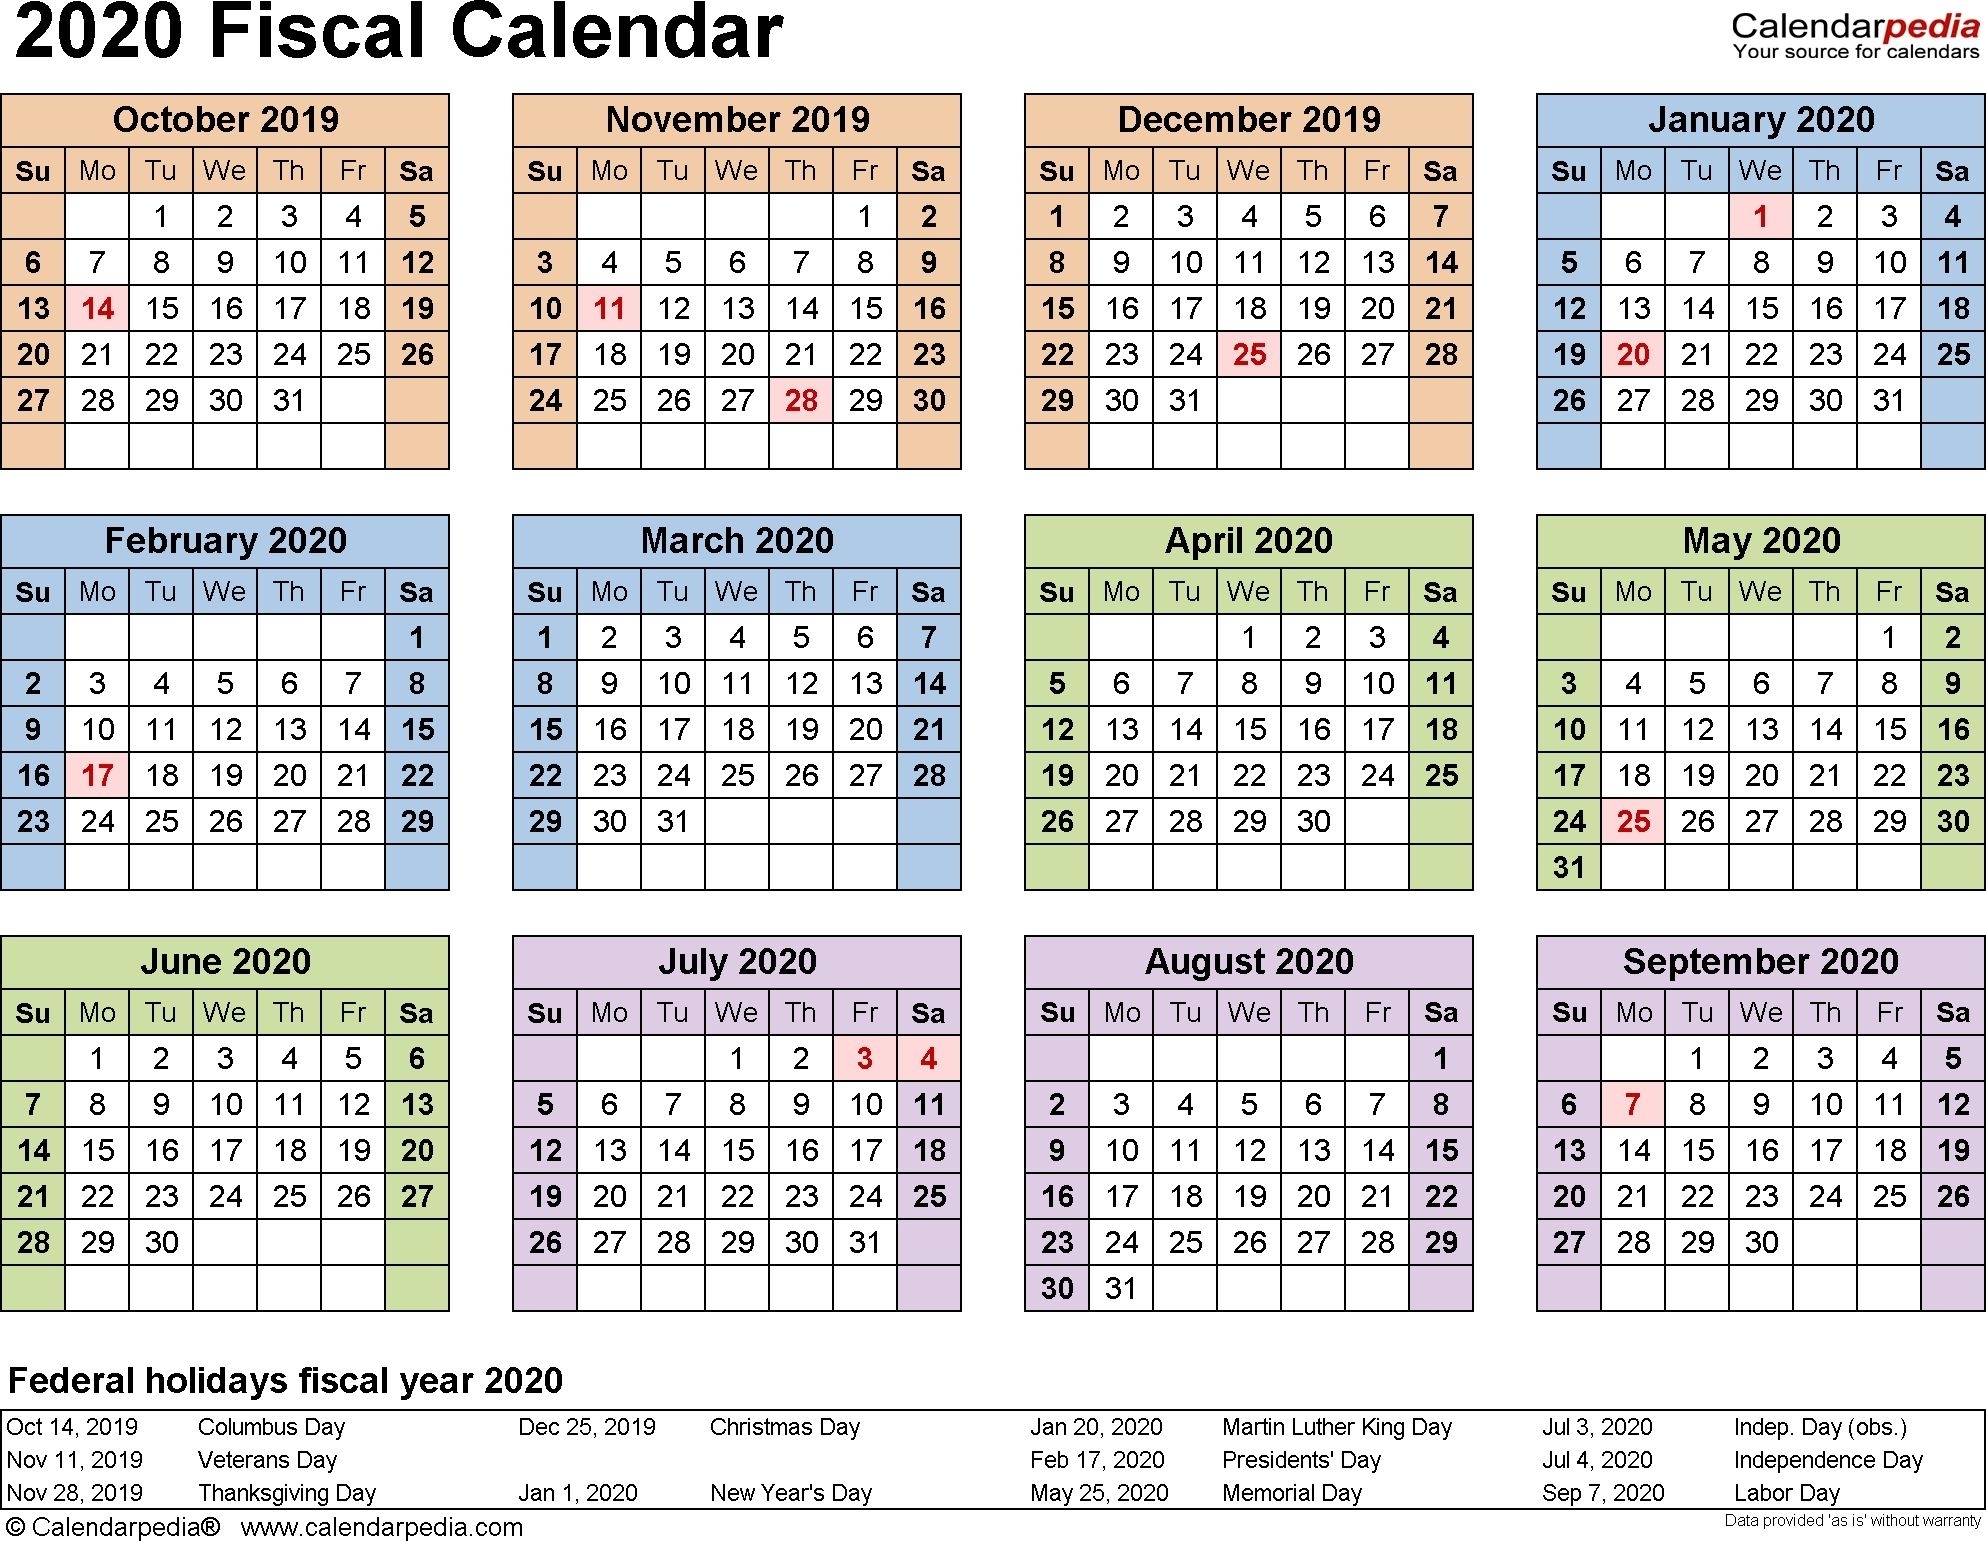 2019 2020 Financial Year Calendar In 2020 | Payroll Calendar with Financial Week To Calendar 2019